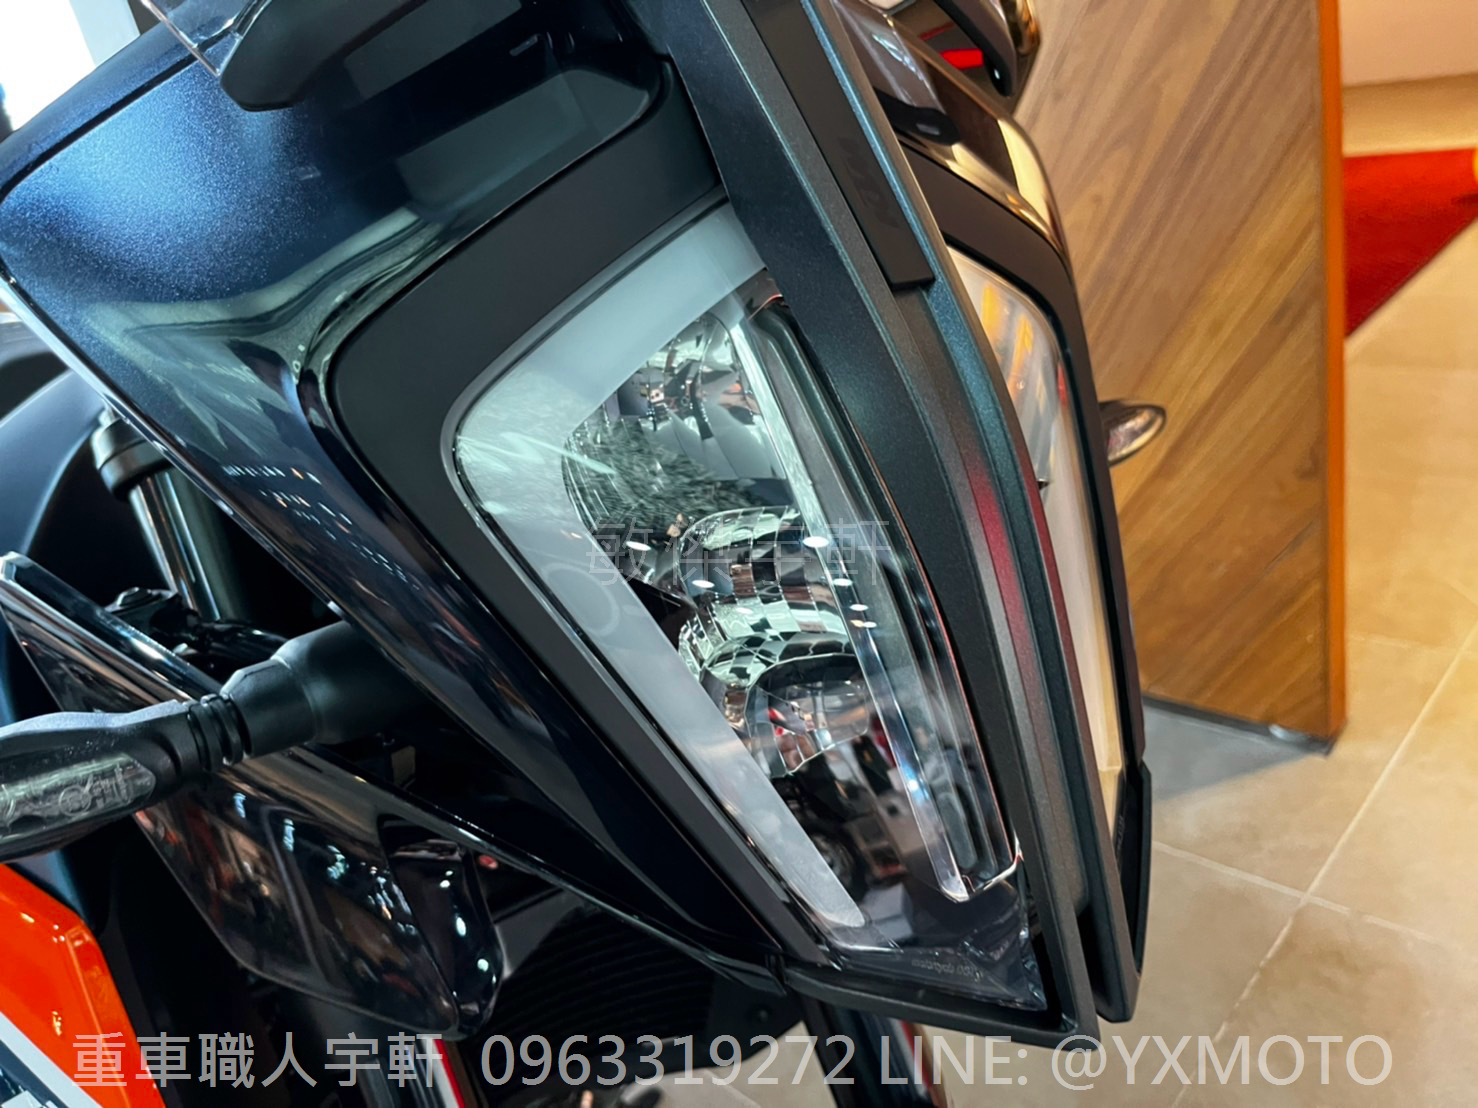 KTM 390 ADVENTURE新車出售中 【敏傑宇軒】KTM 390 ADVENTURE 安東 總代理公司車 全額72期零利率 | 重車銷售職人-宇軒 (敏傑)